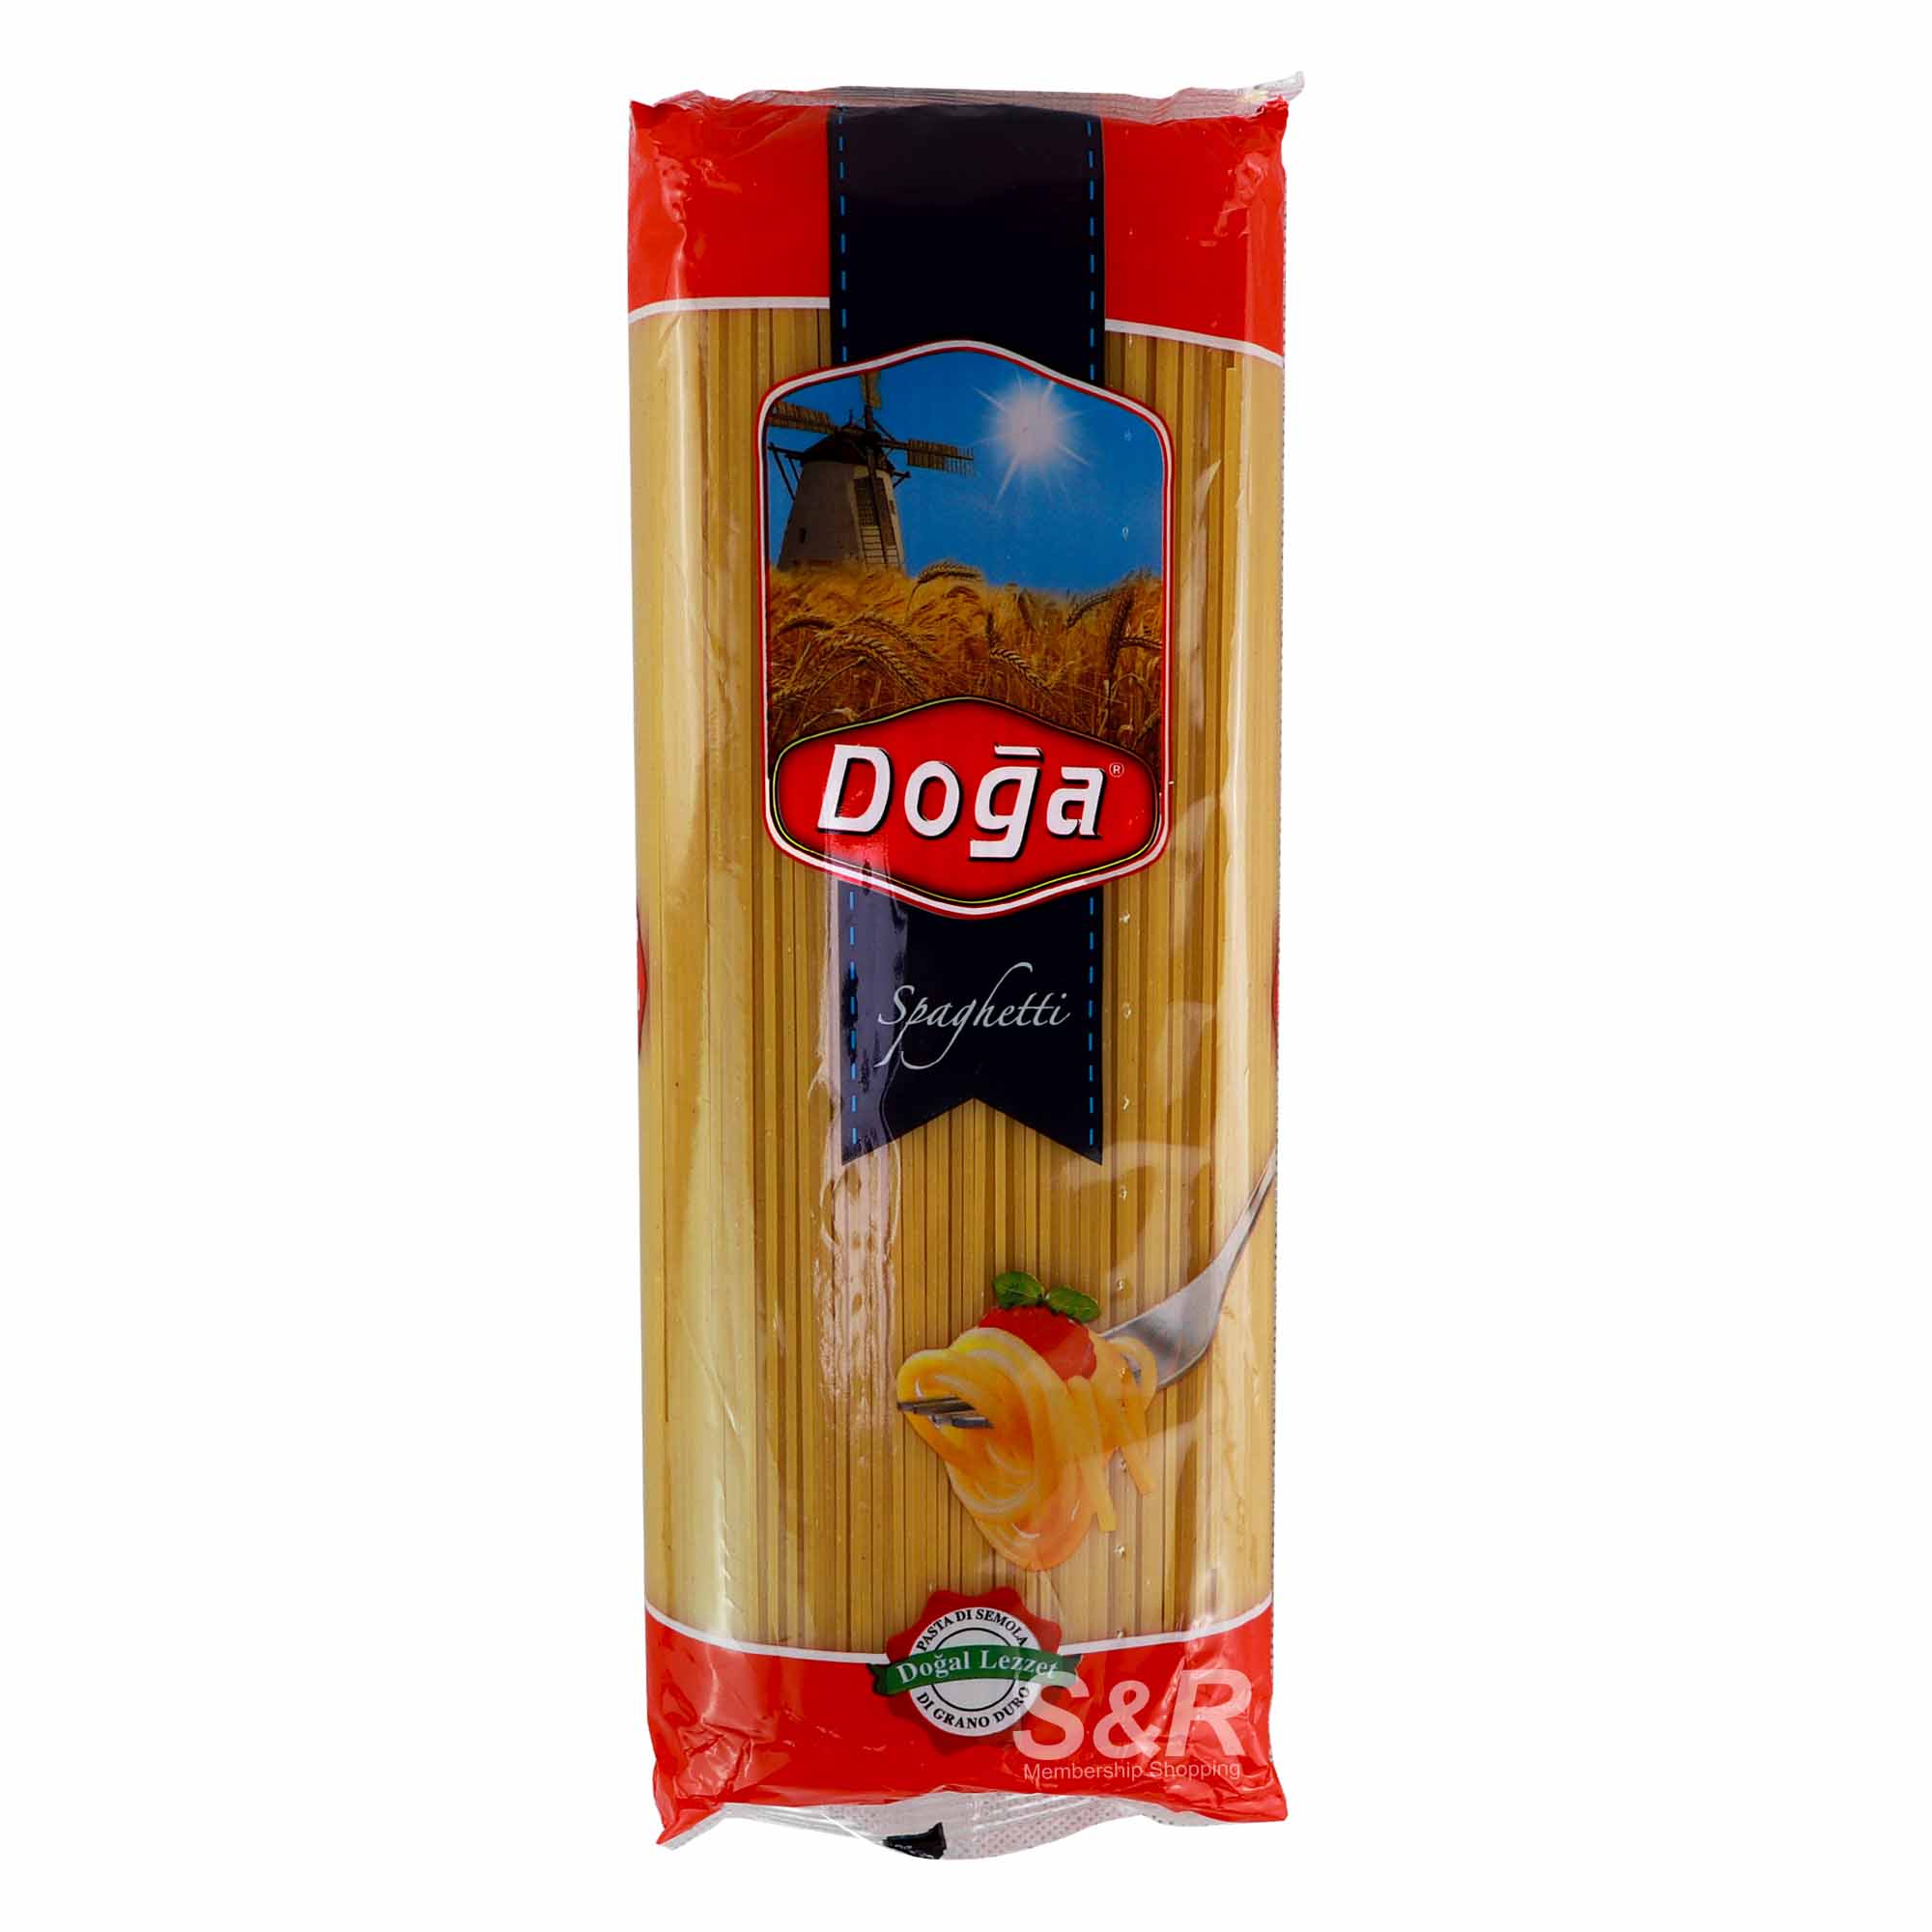 Doga Spaghetti 1kg